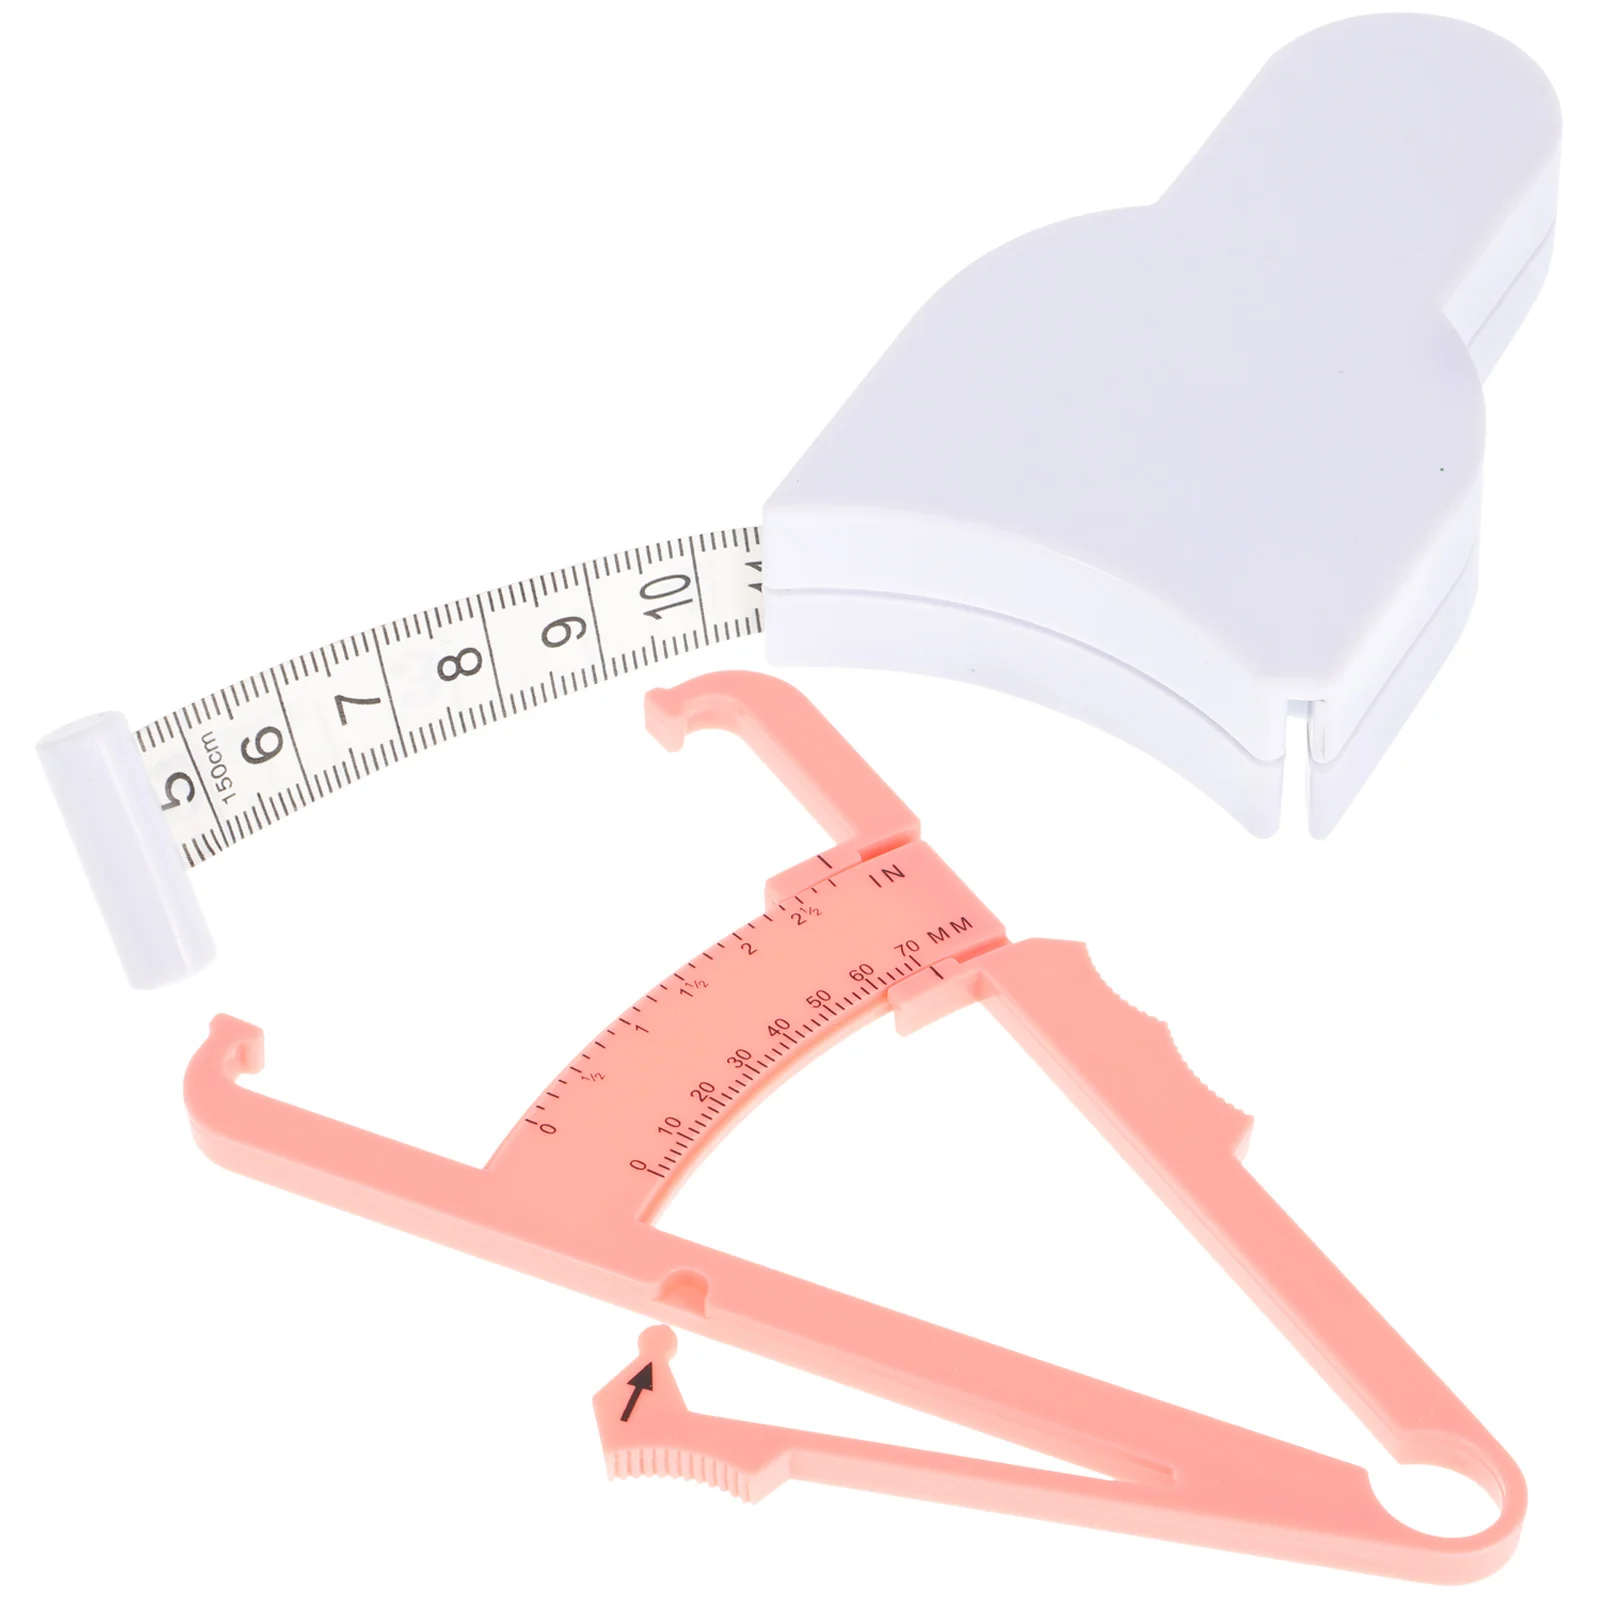 

Fat Waist Ruler Measuring Tool Skinfold Body Caliper Digital Measure Device Tester Tape Handheld Measurer Calculator